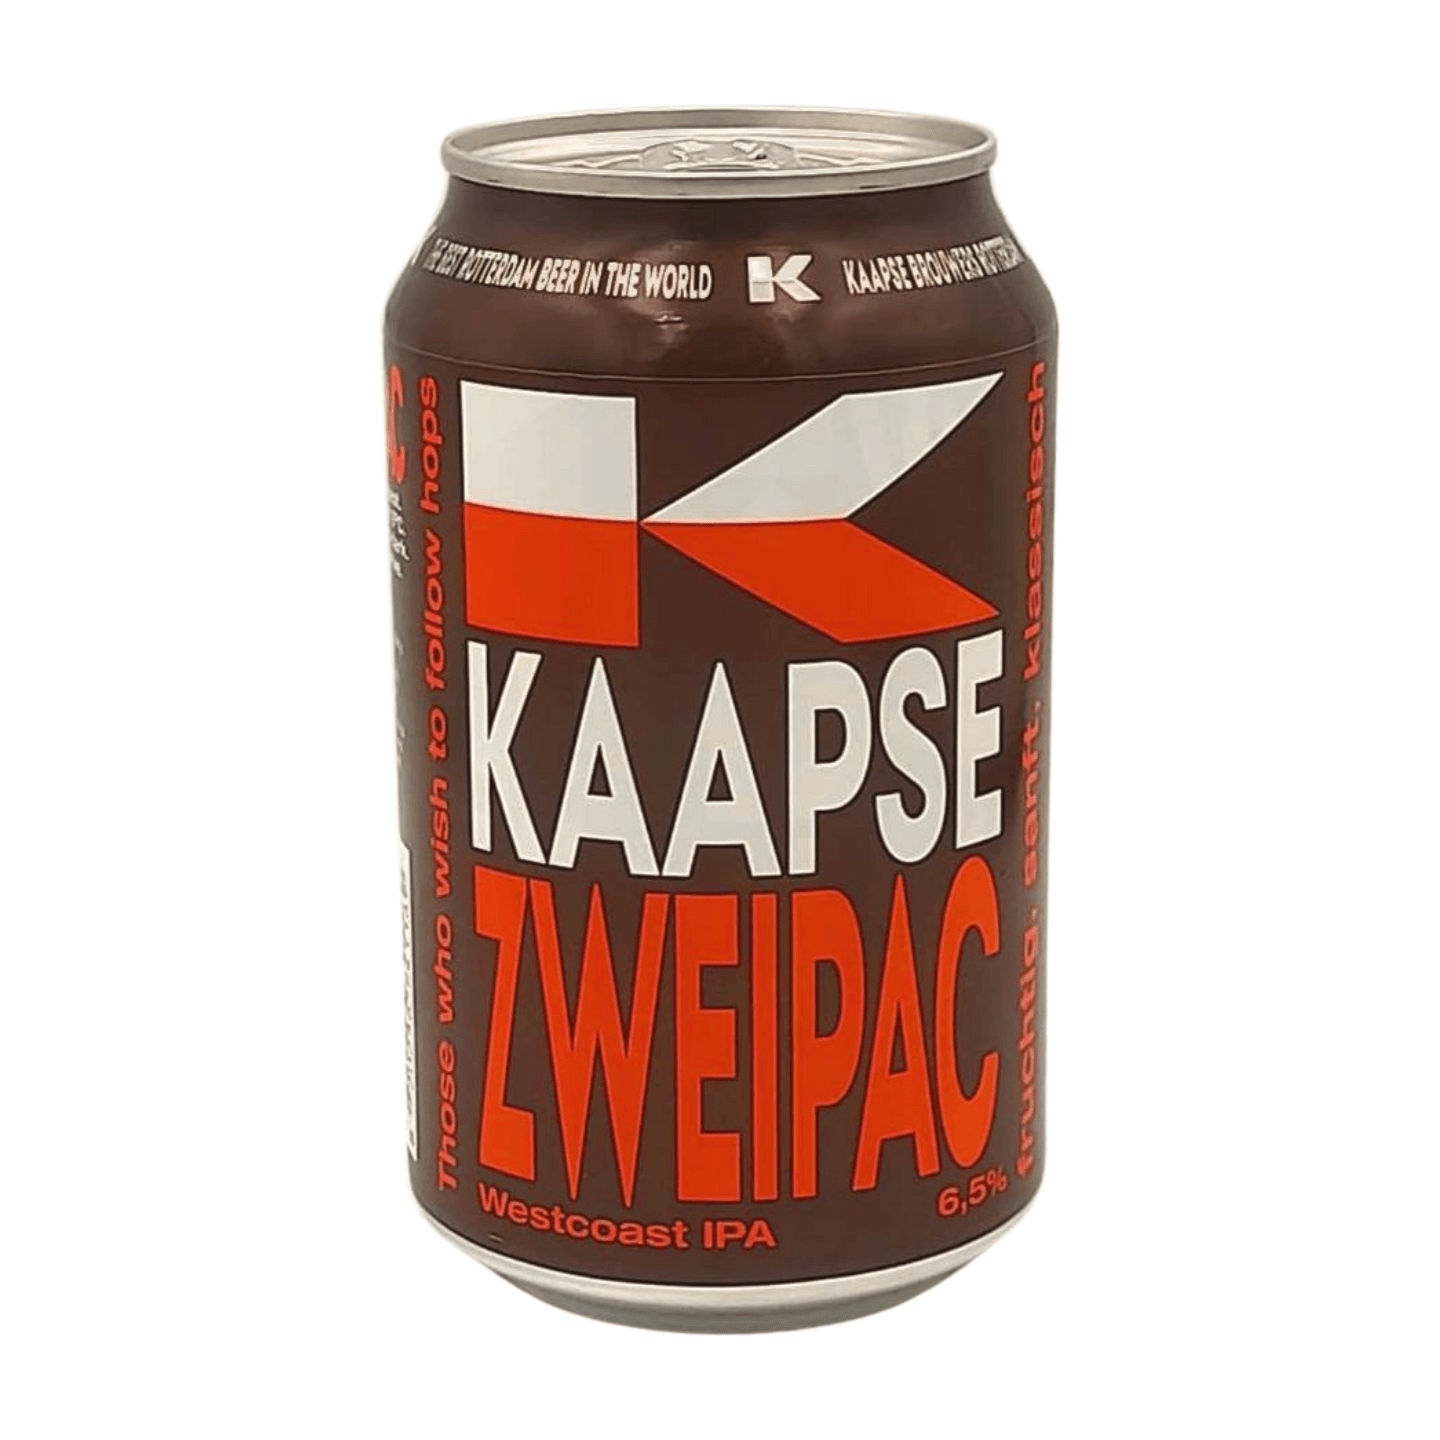 Kaapse Brouwers Zweipac | Westcoast IPA Webshop Online Verdins Bierwinkel Rotterdam